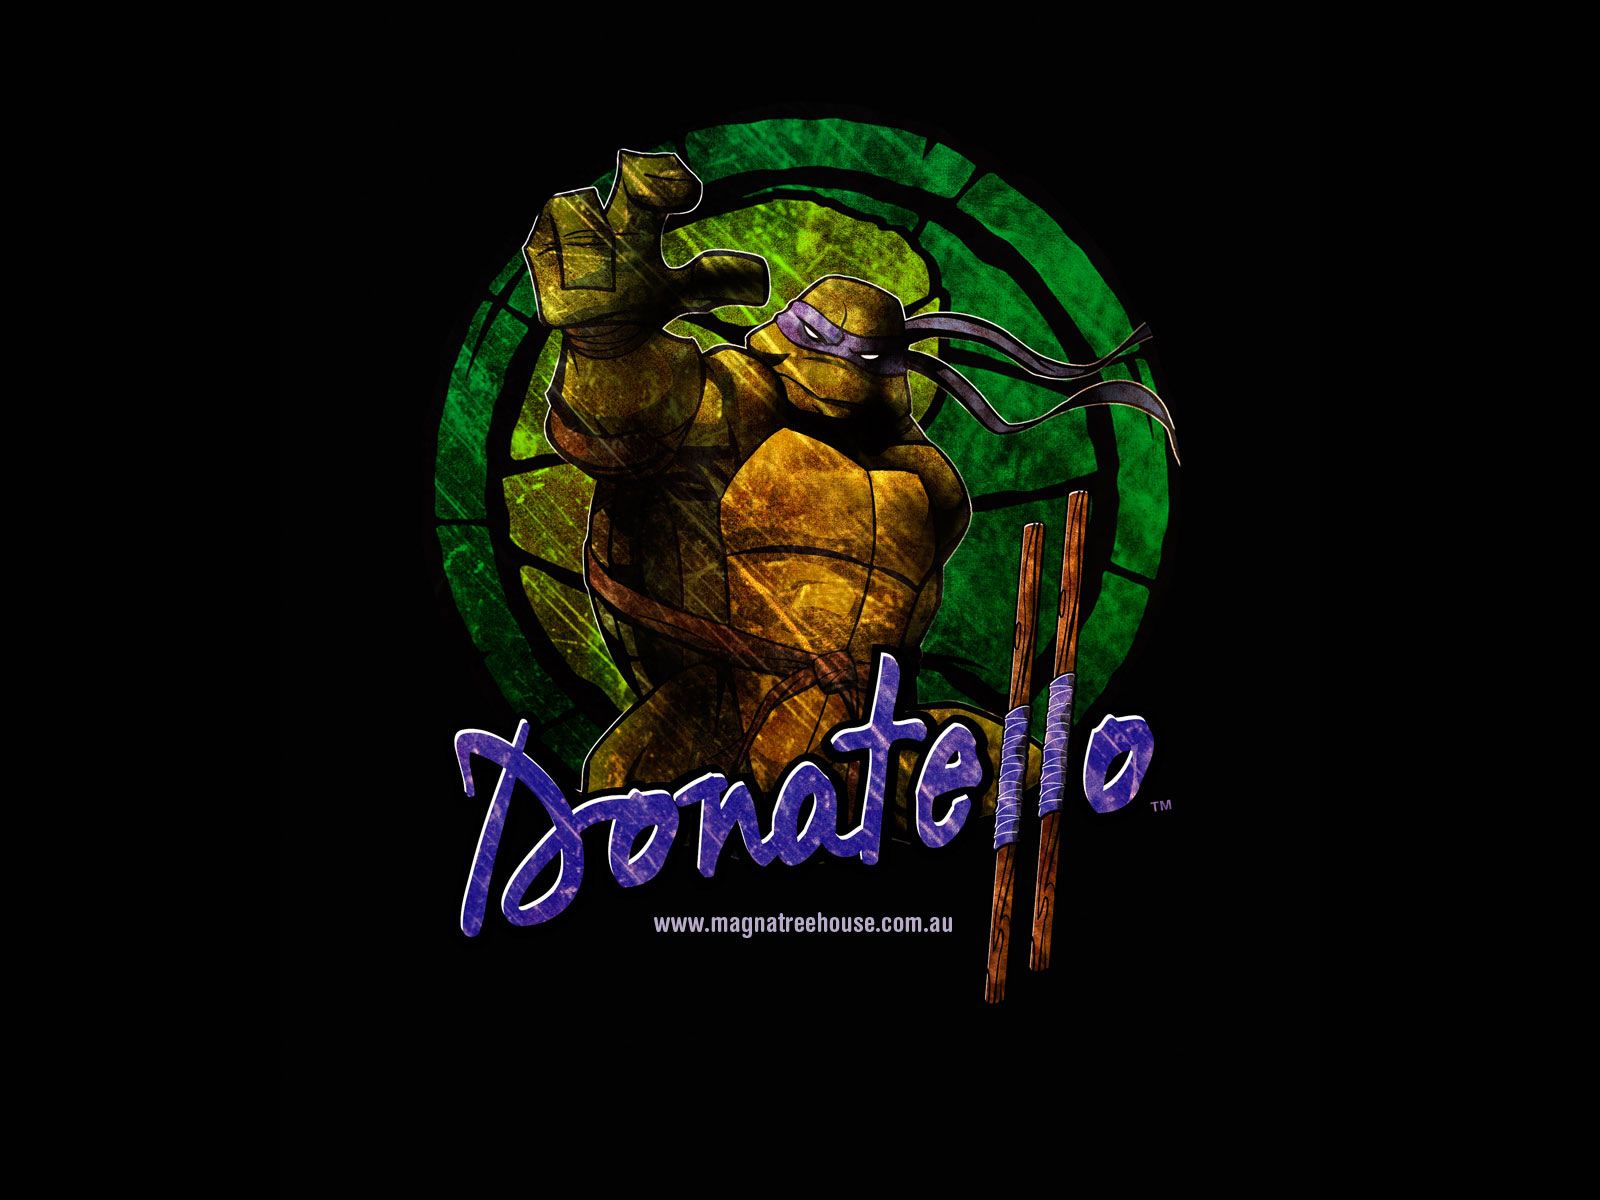 Donatello Wallpapers